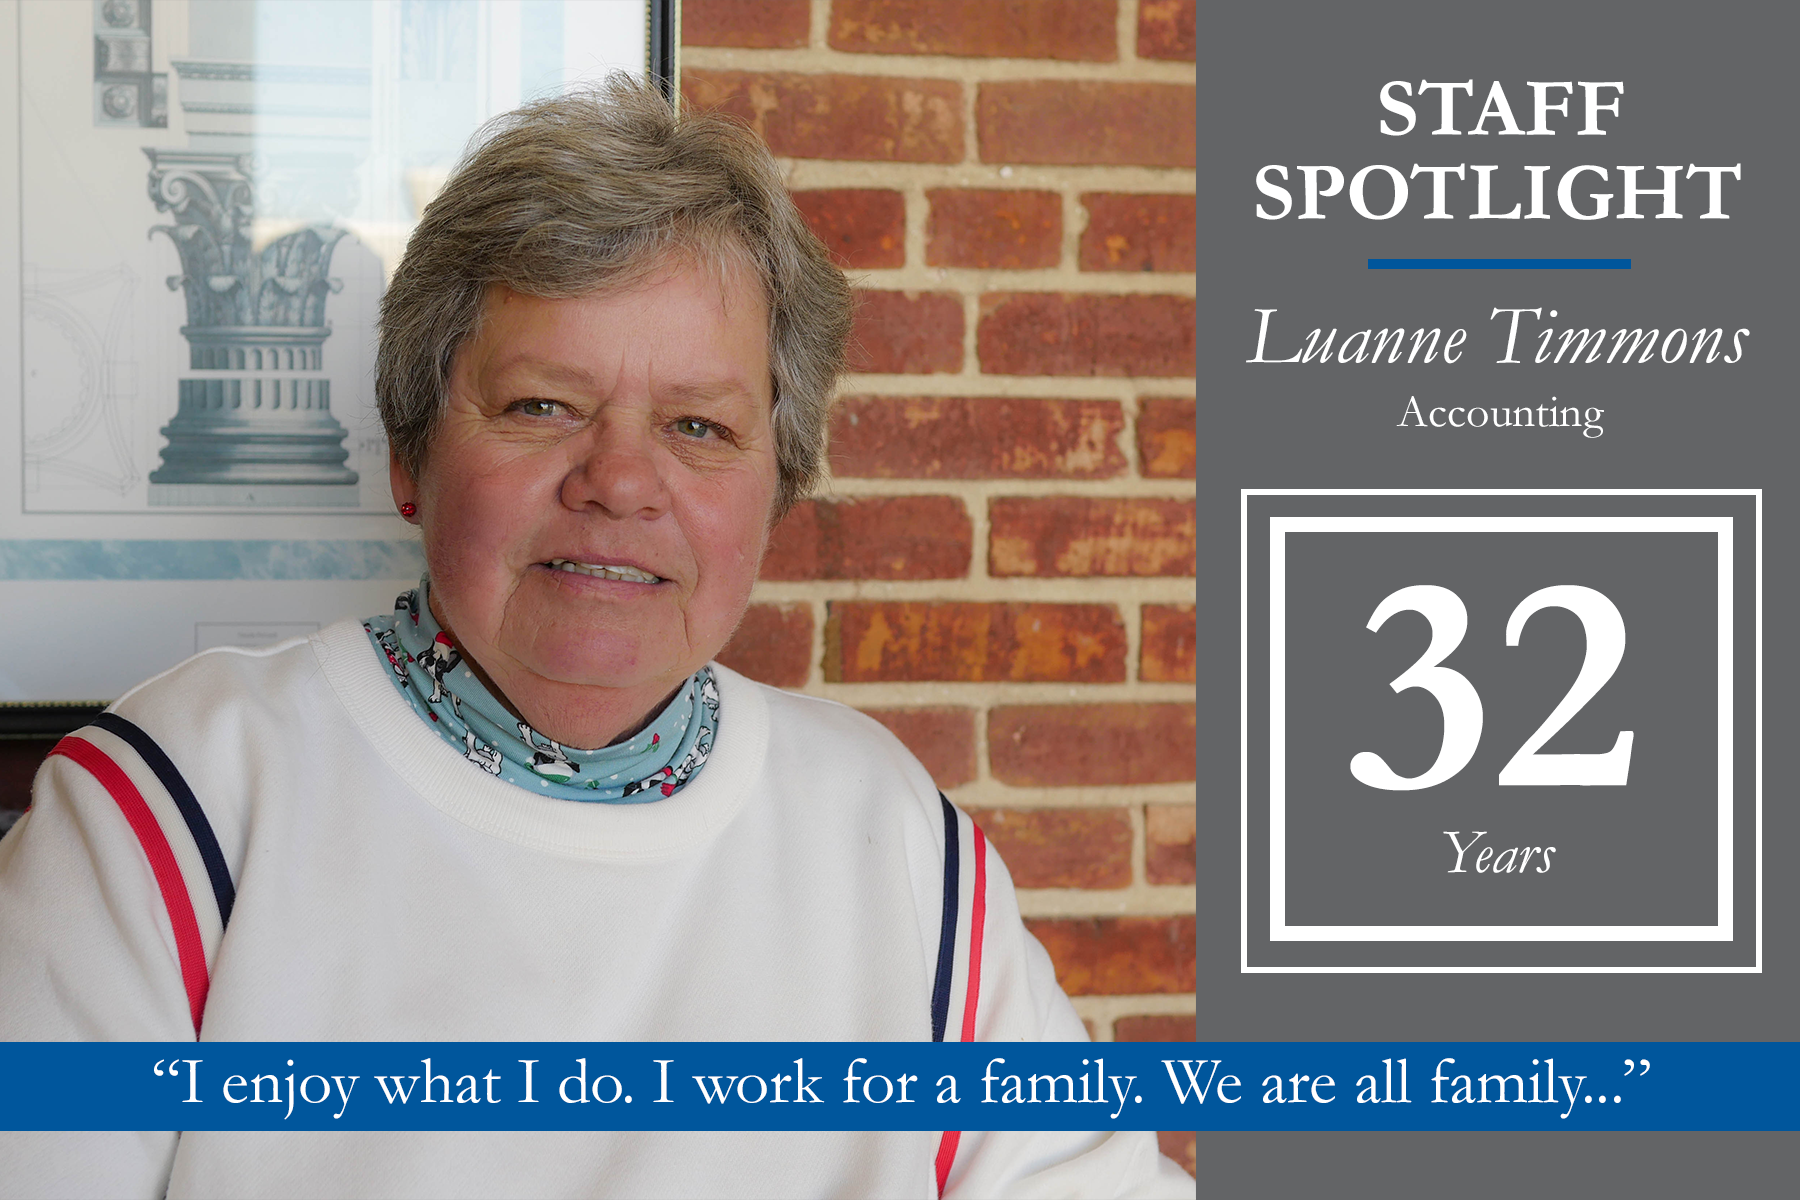 Staff Spotlight: Luanne Timmons